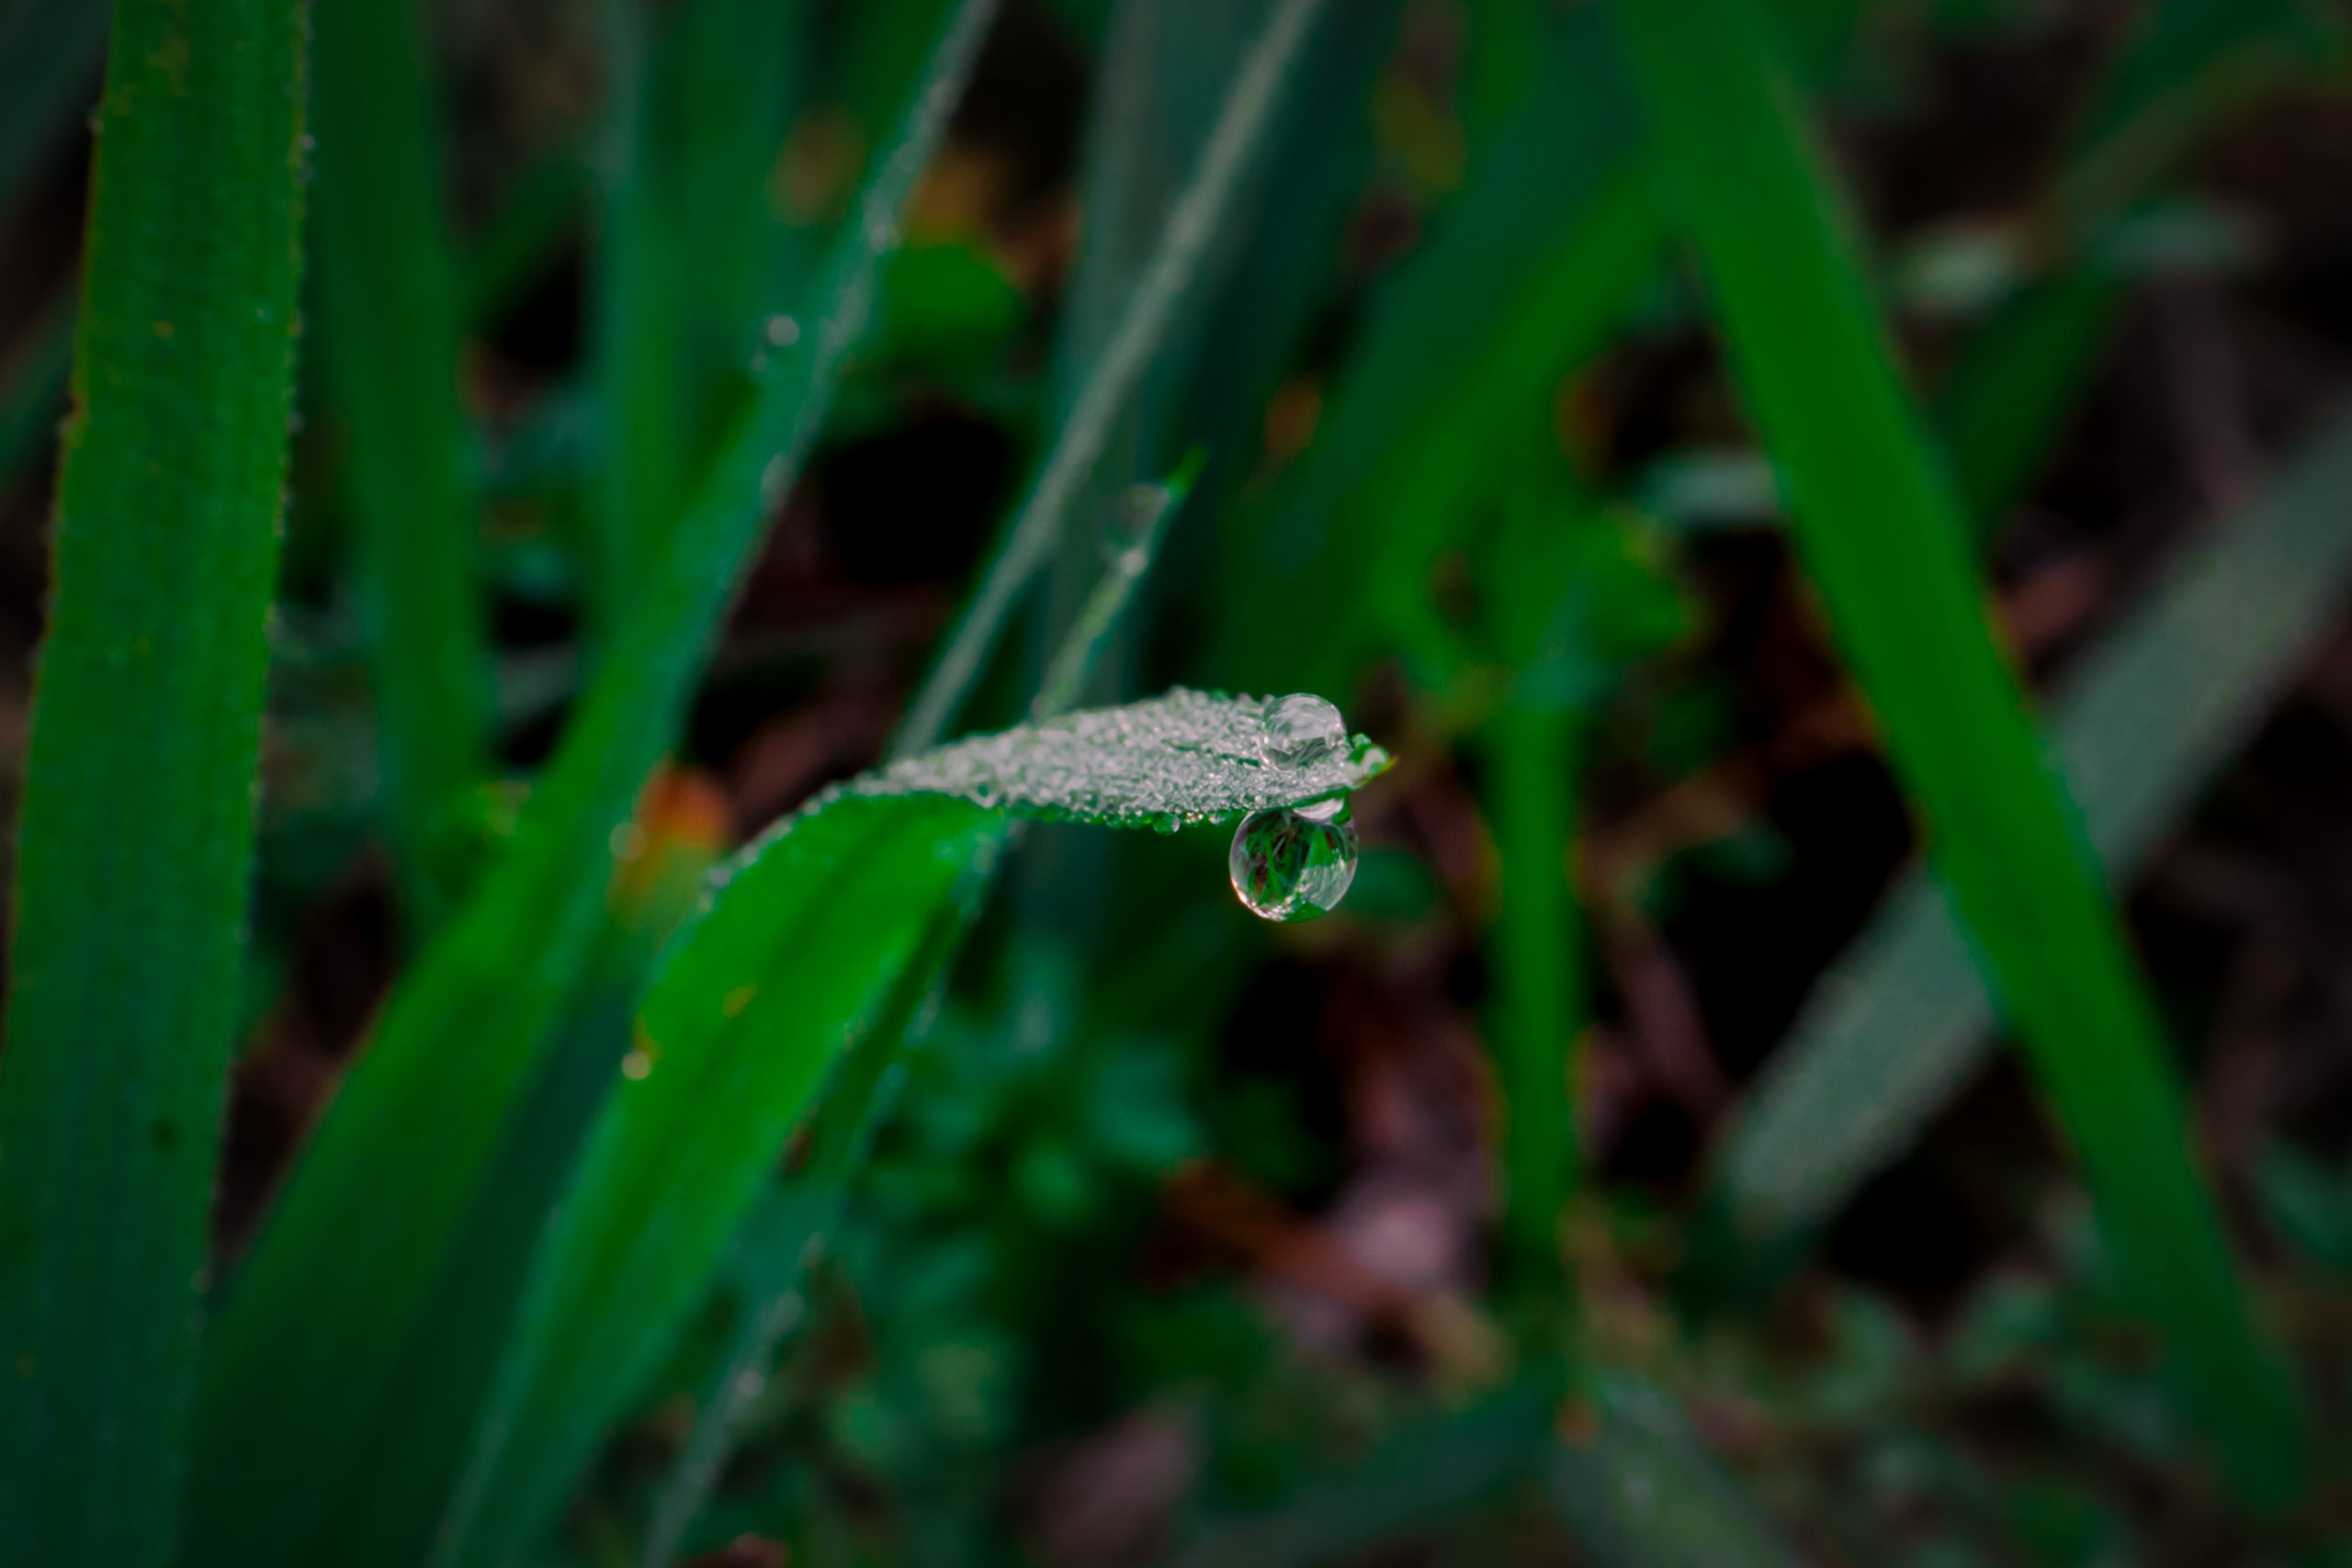 Dew drop on a grass straw